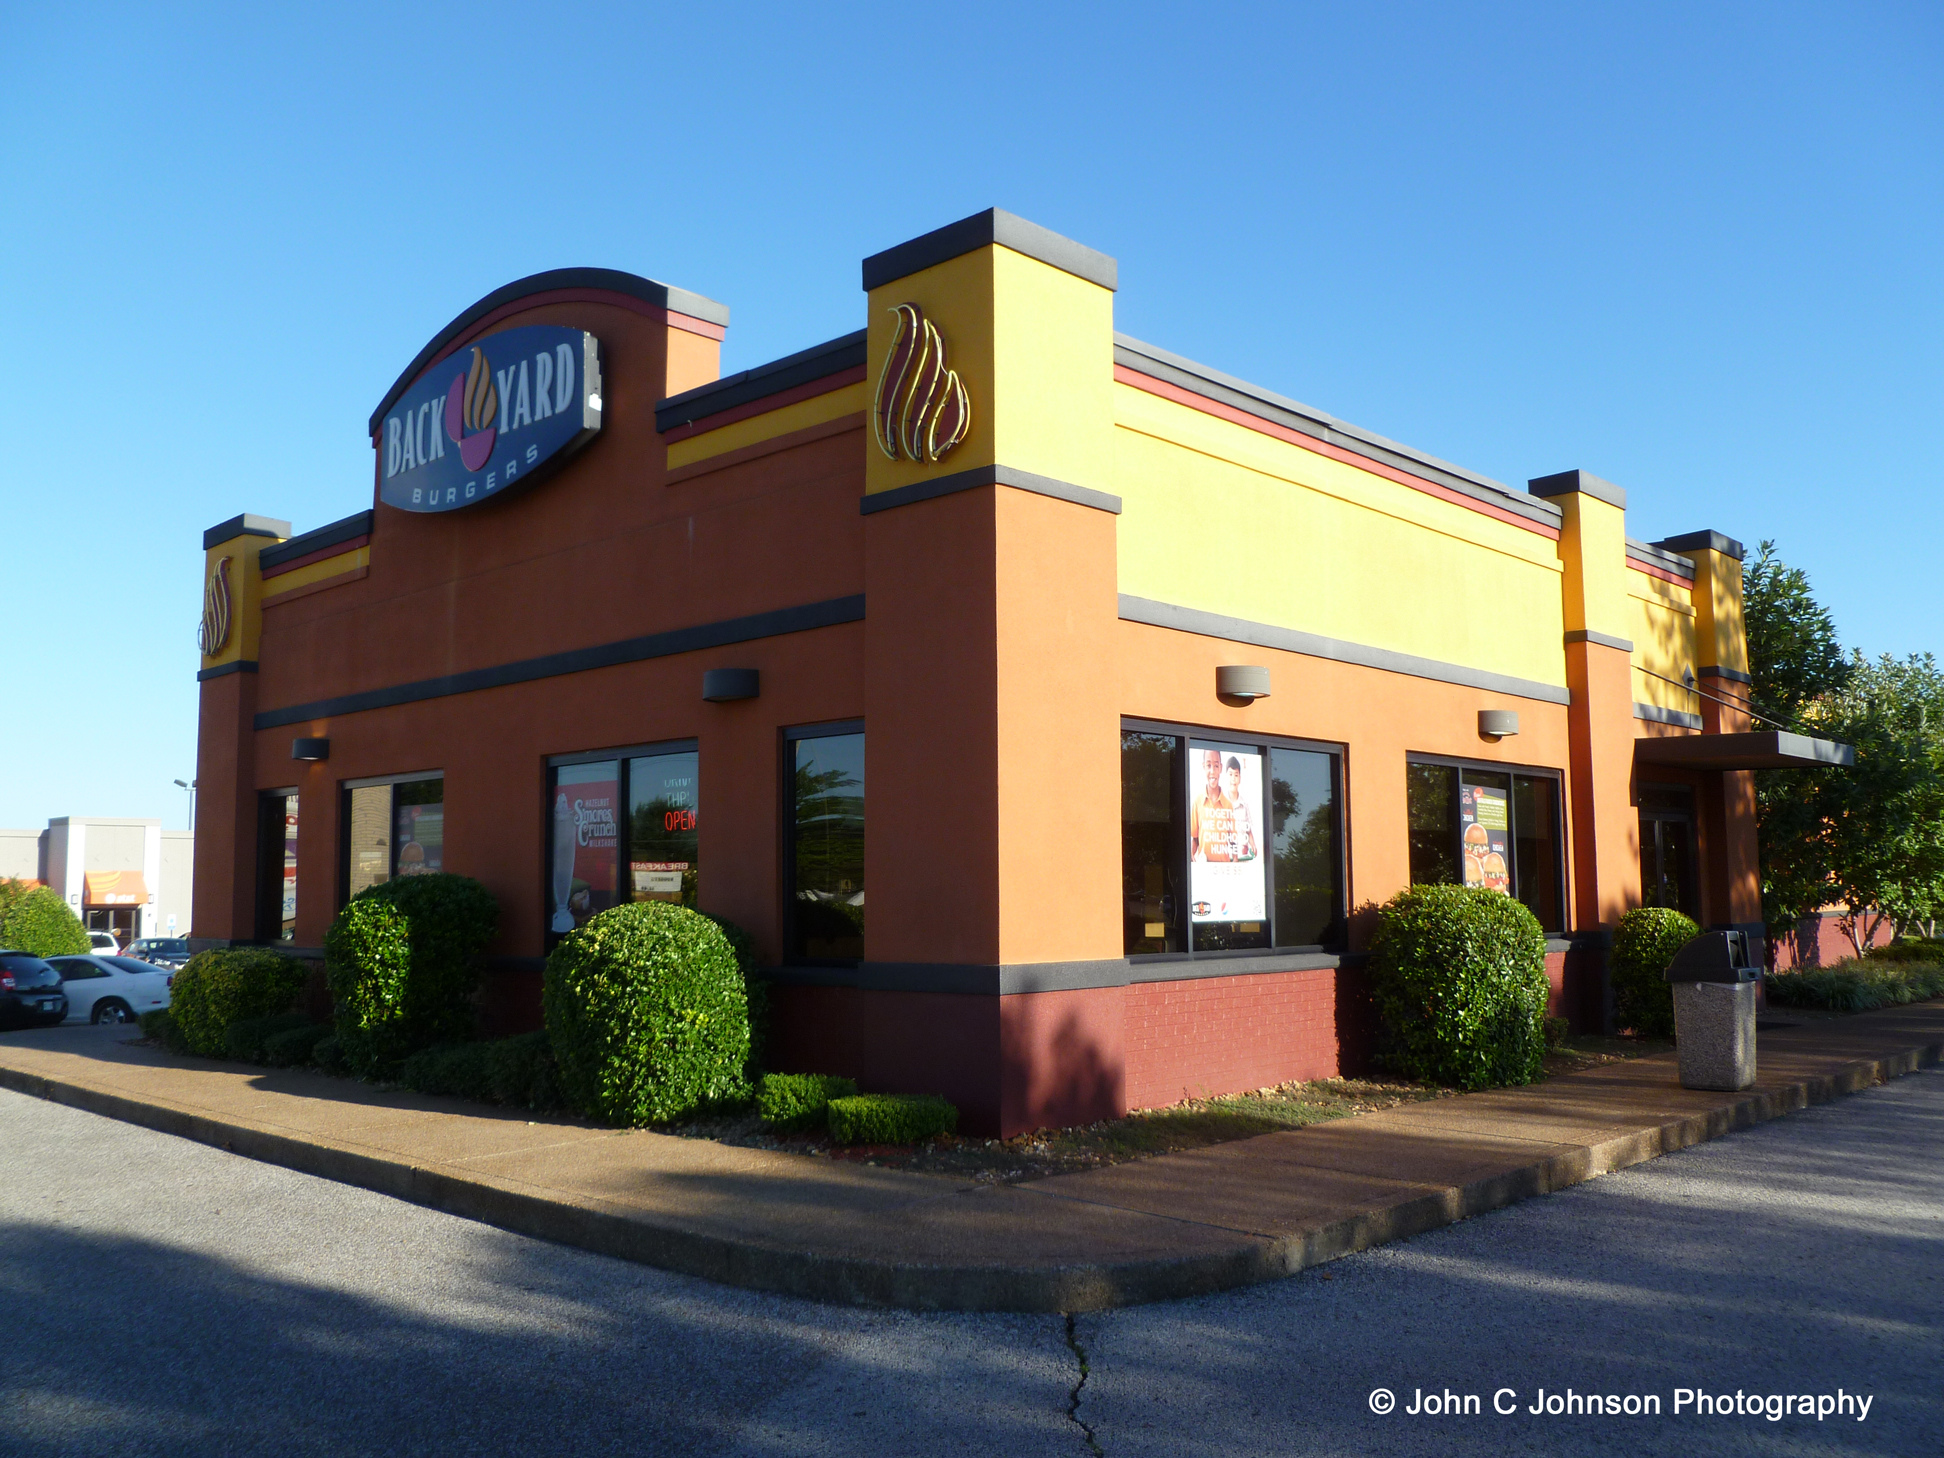 Back Yard Burgers Southhaven, Mississippi